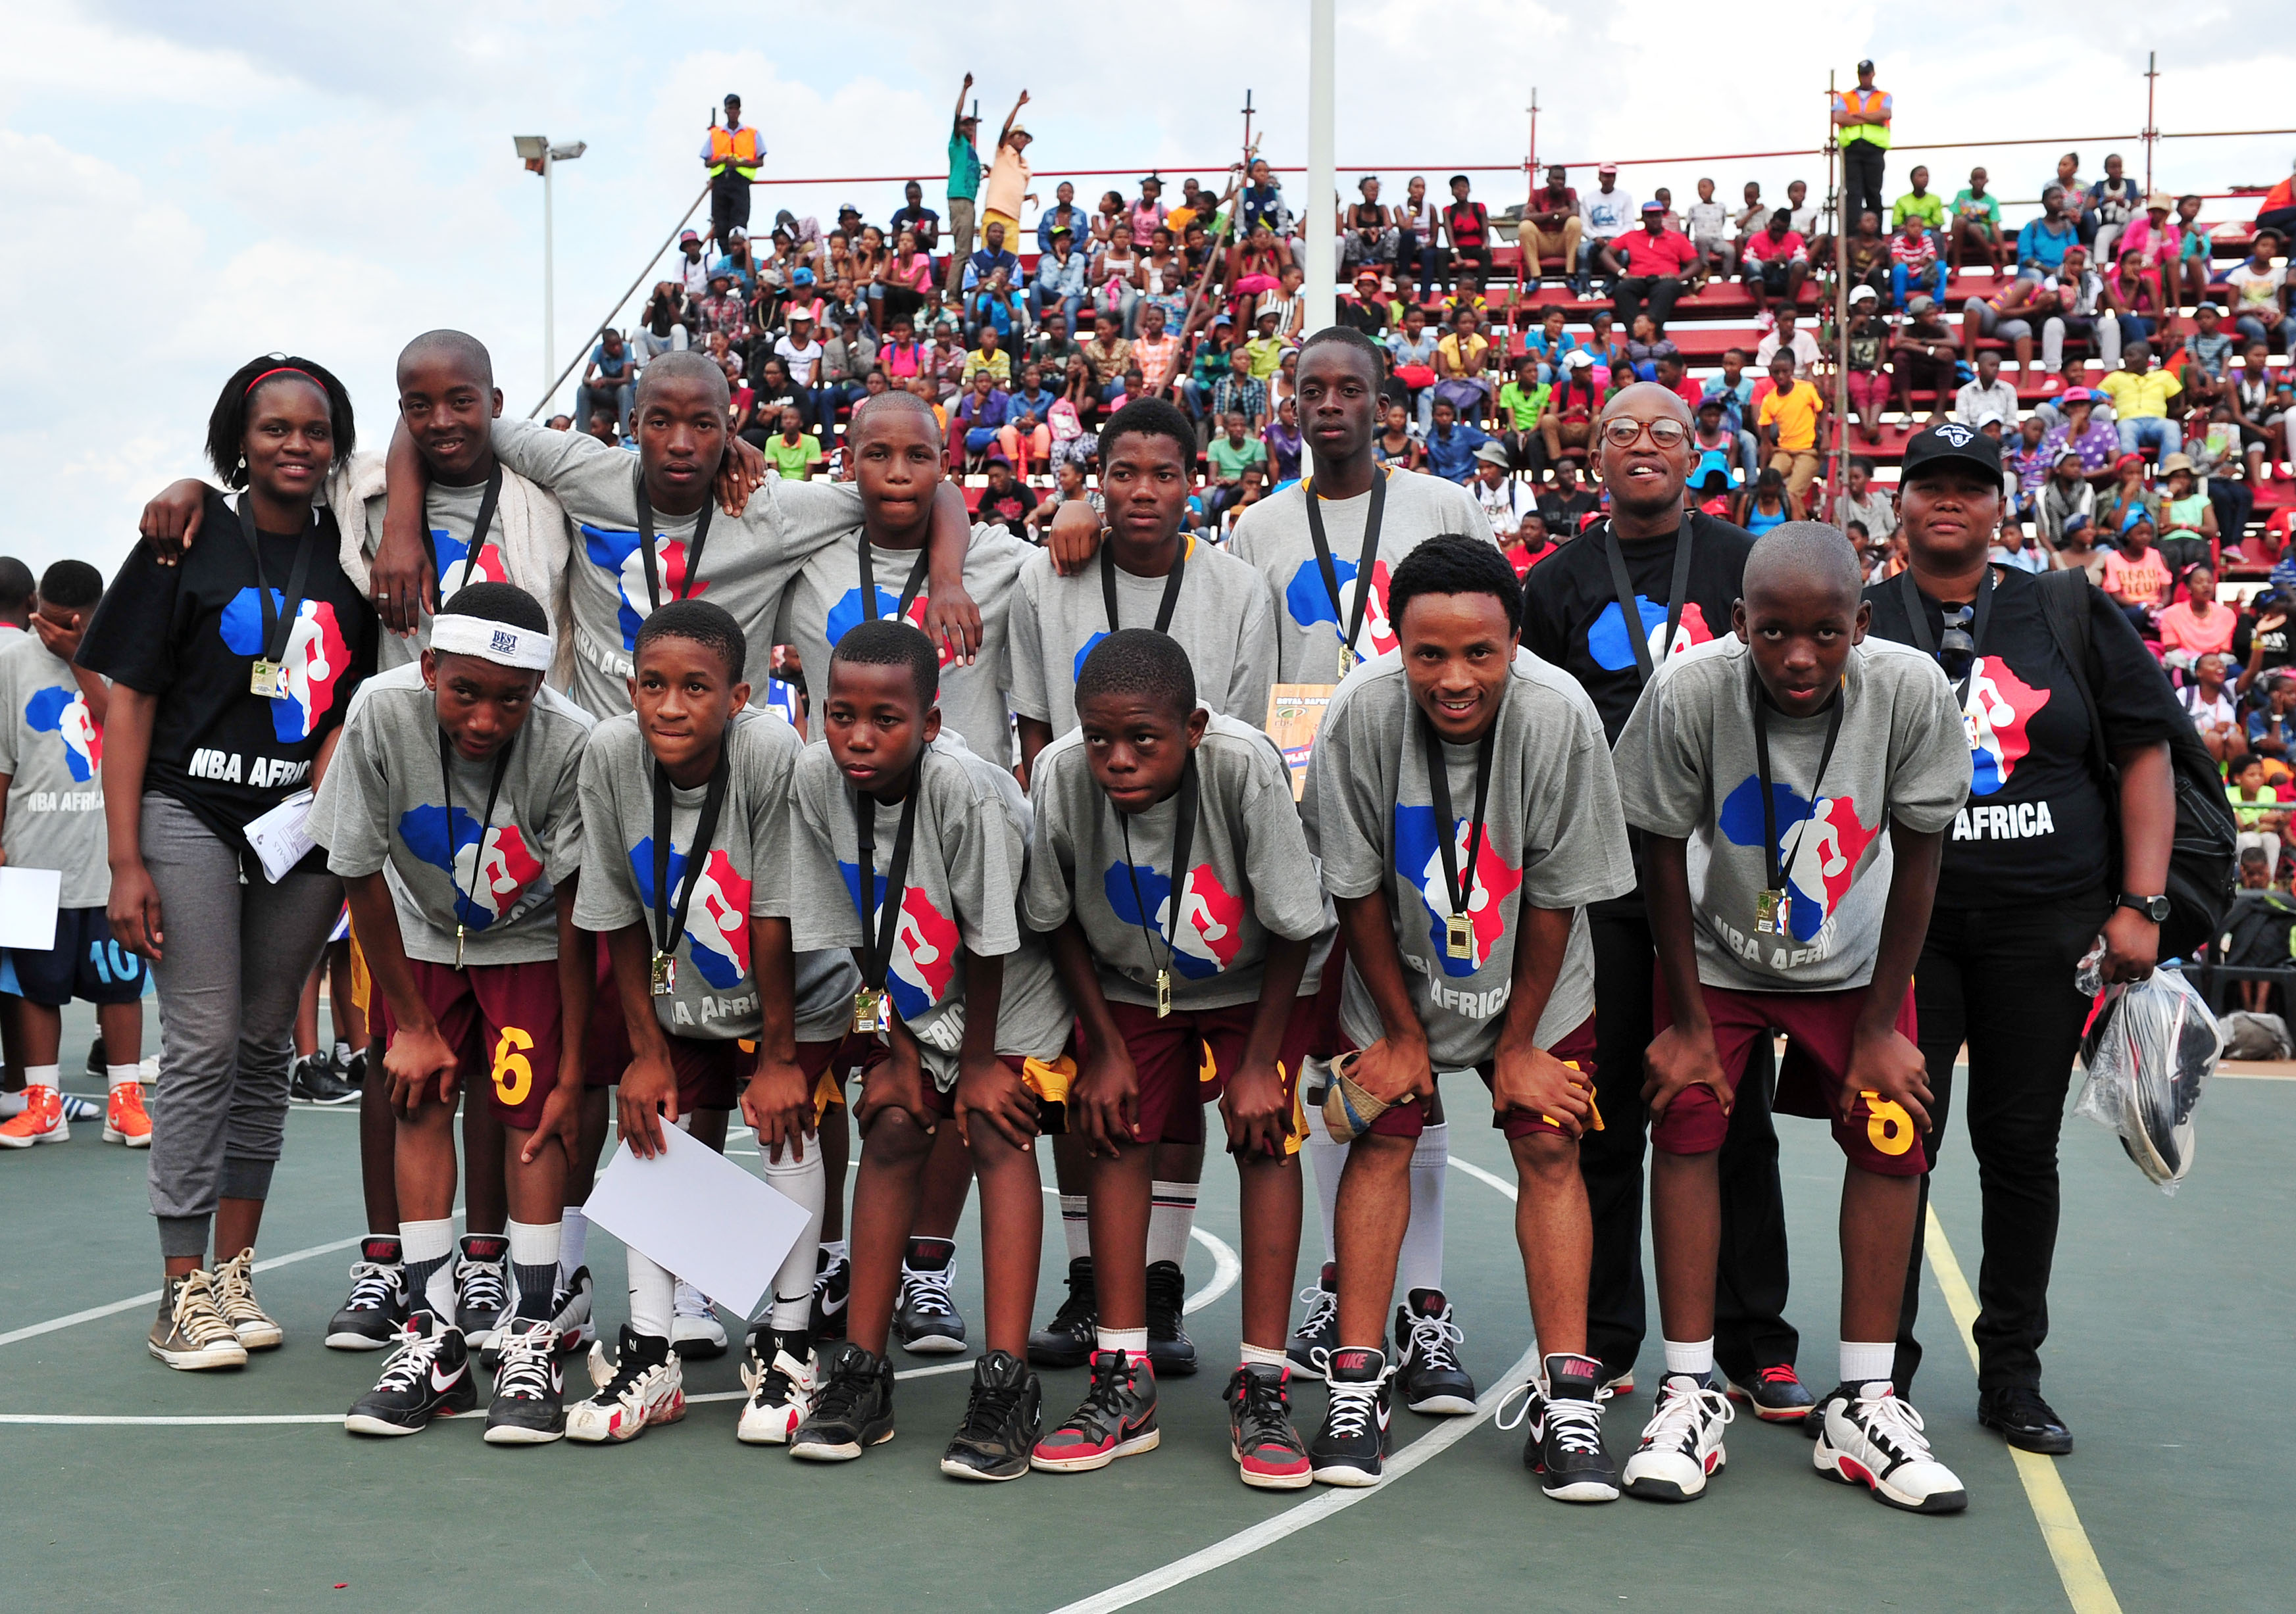 Boys Middle School Champions: Keledi Secondary School (Junior Tear Droppers), 25 October 2014 